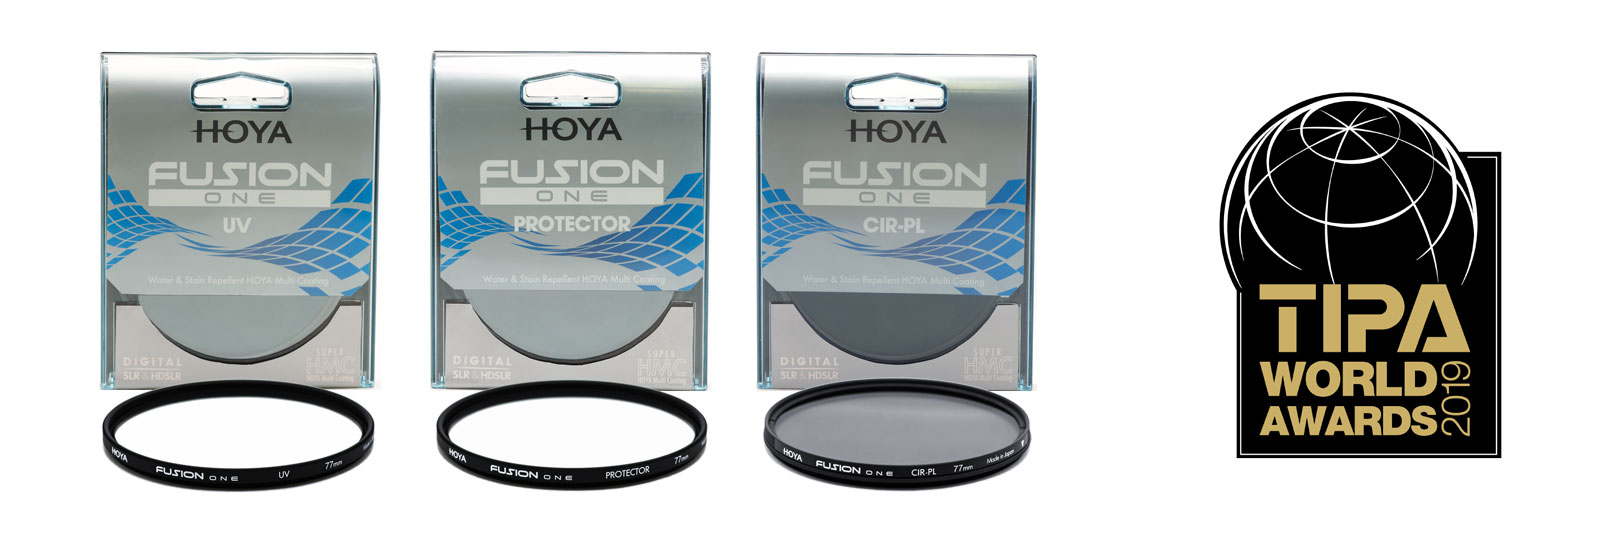 HOYA | HOYA FUSION ONE series has received TIPA World Awards 2019